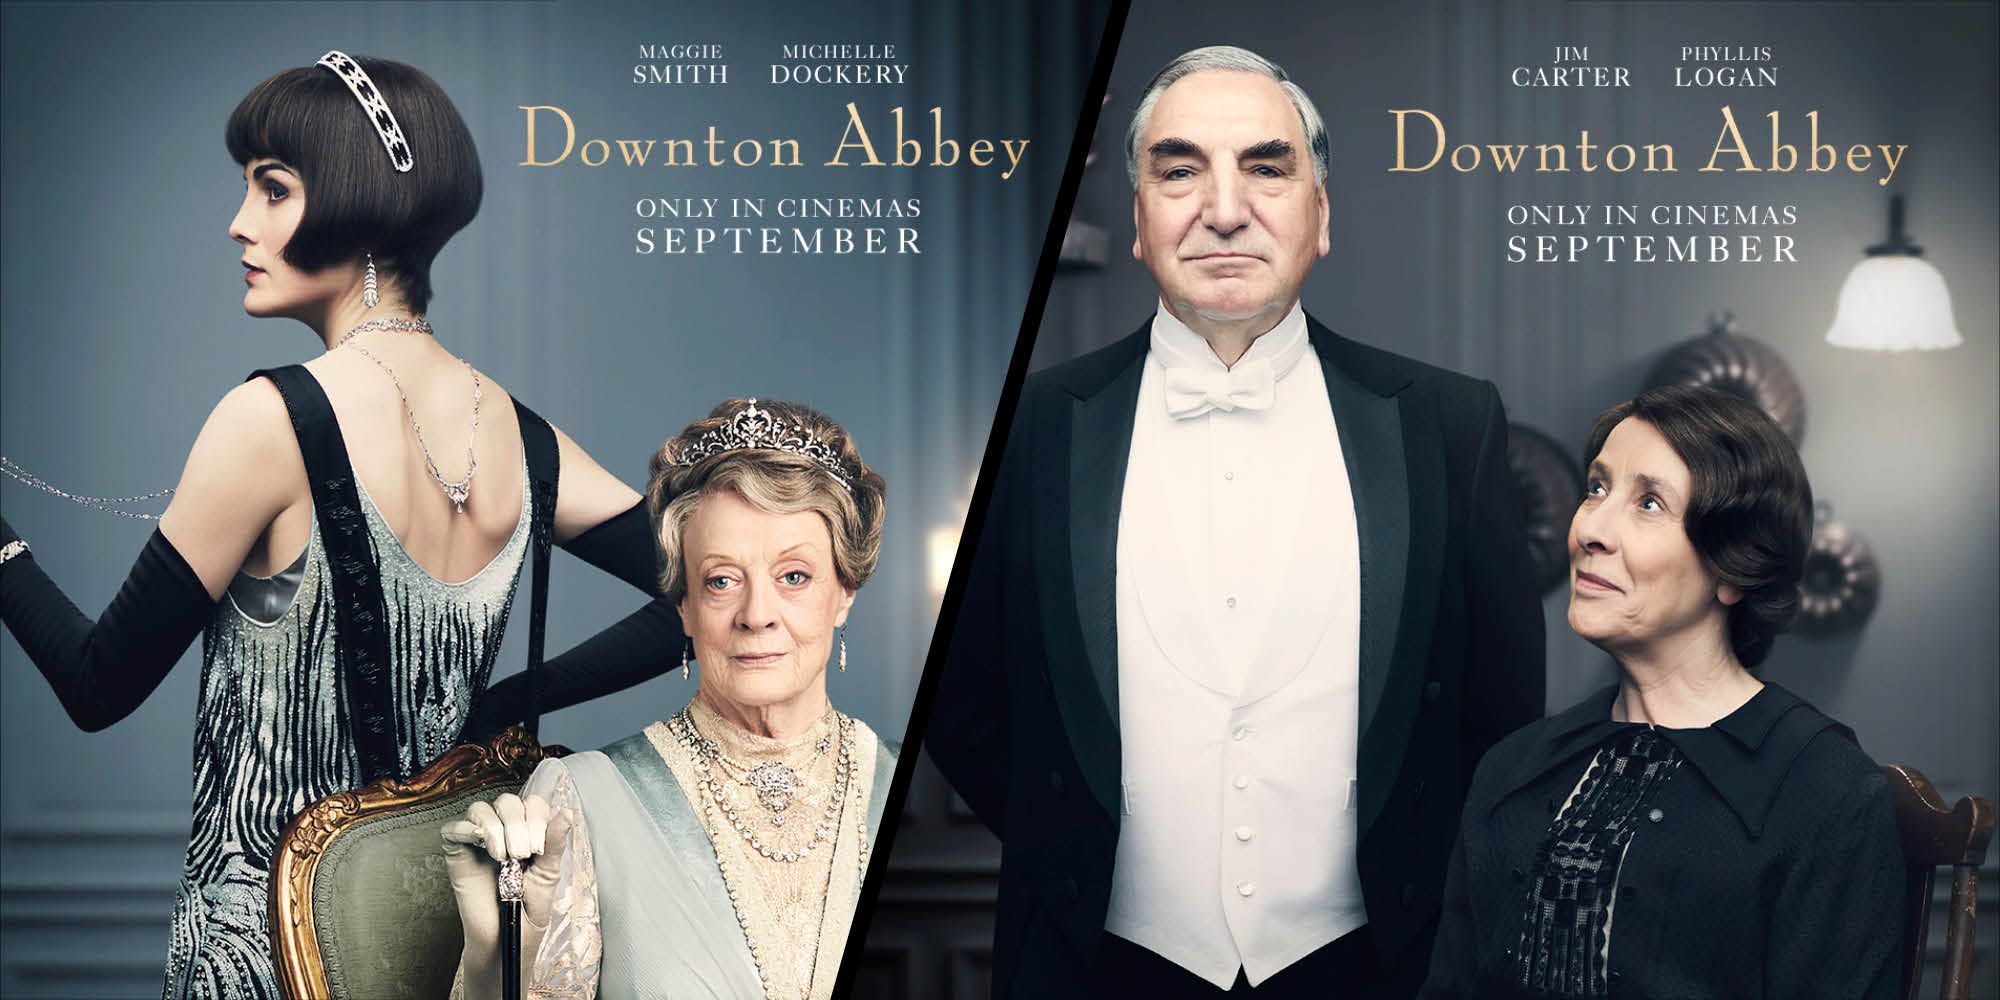 Downton Abbey the movie